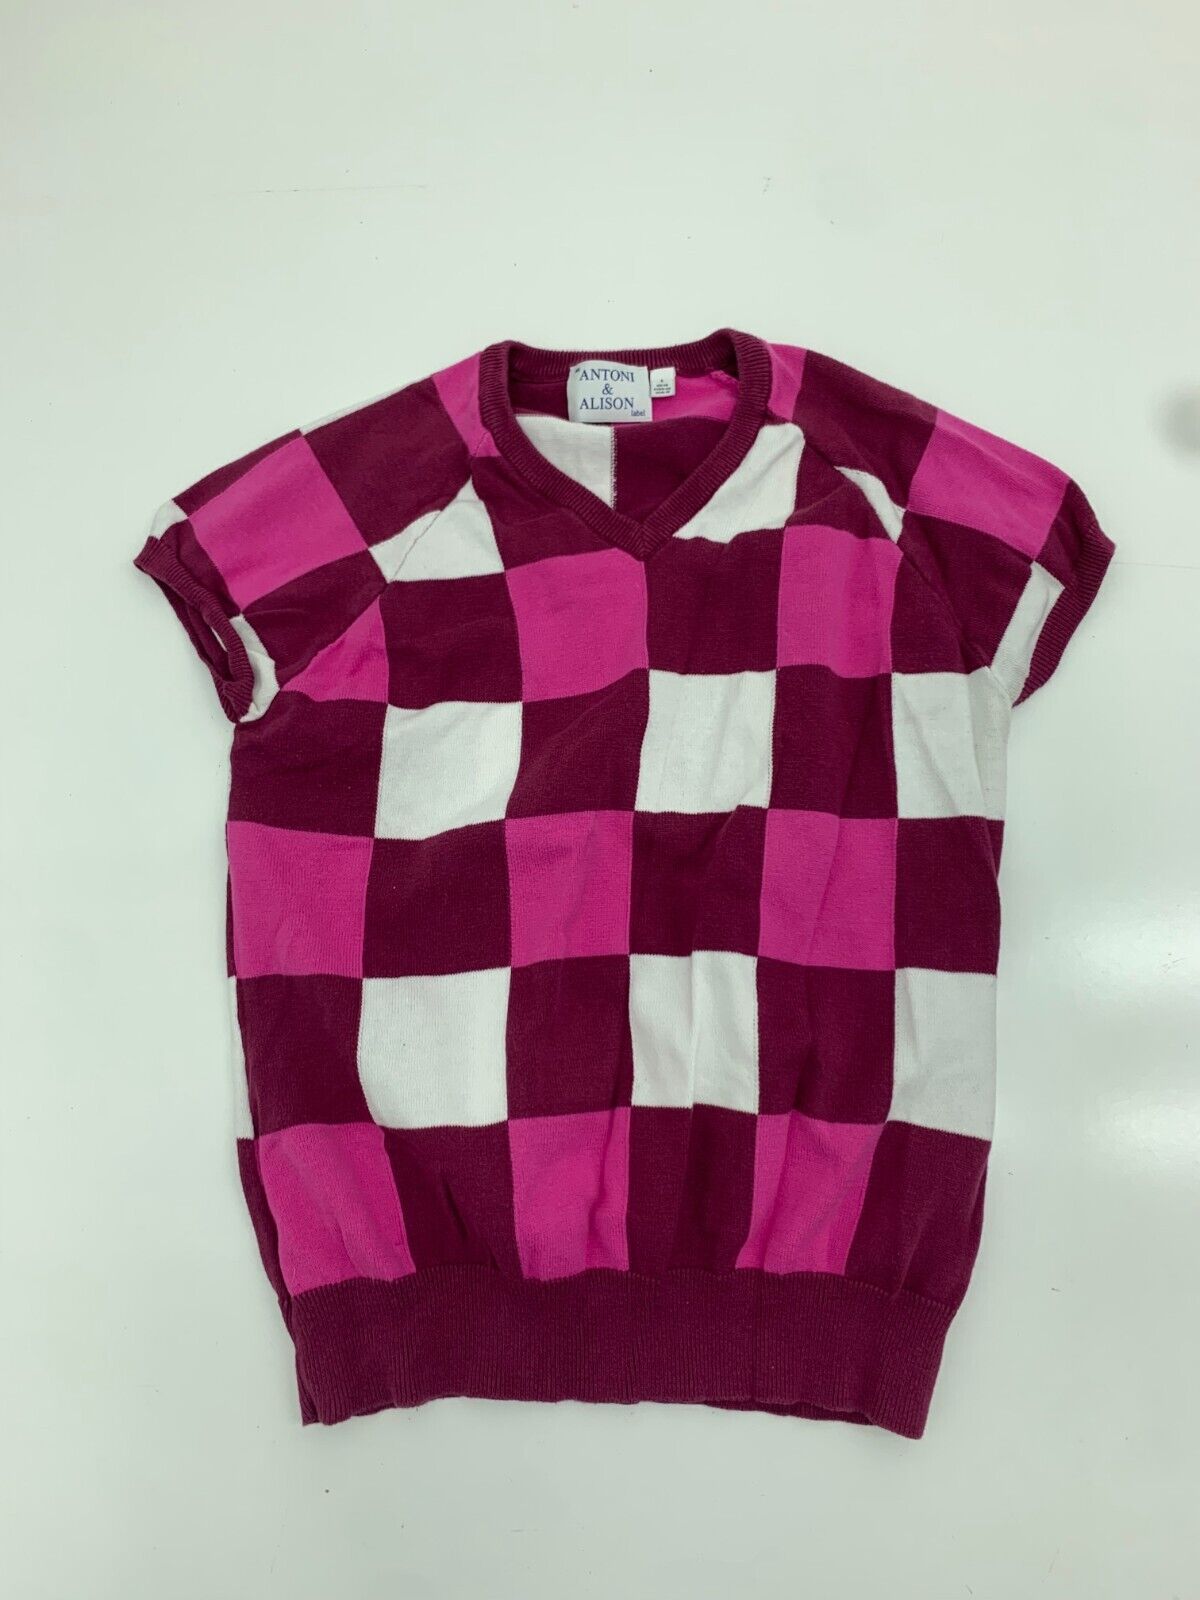 Antoni & Alison Girls Pink Purple Square Print Short Sleeve Size Large